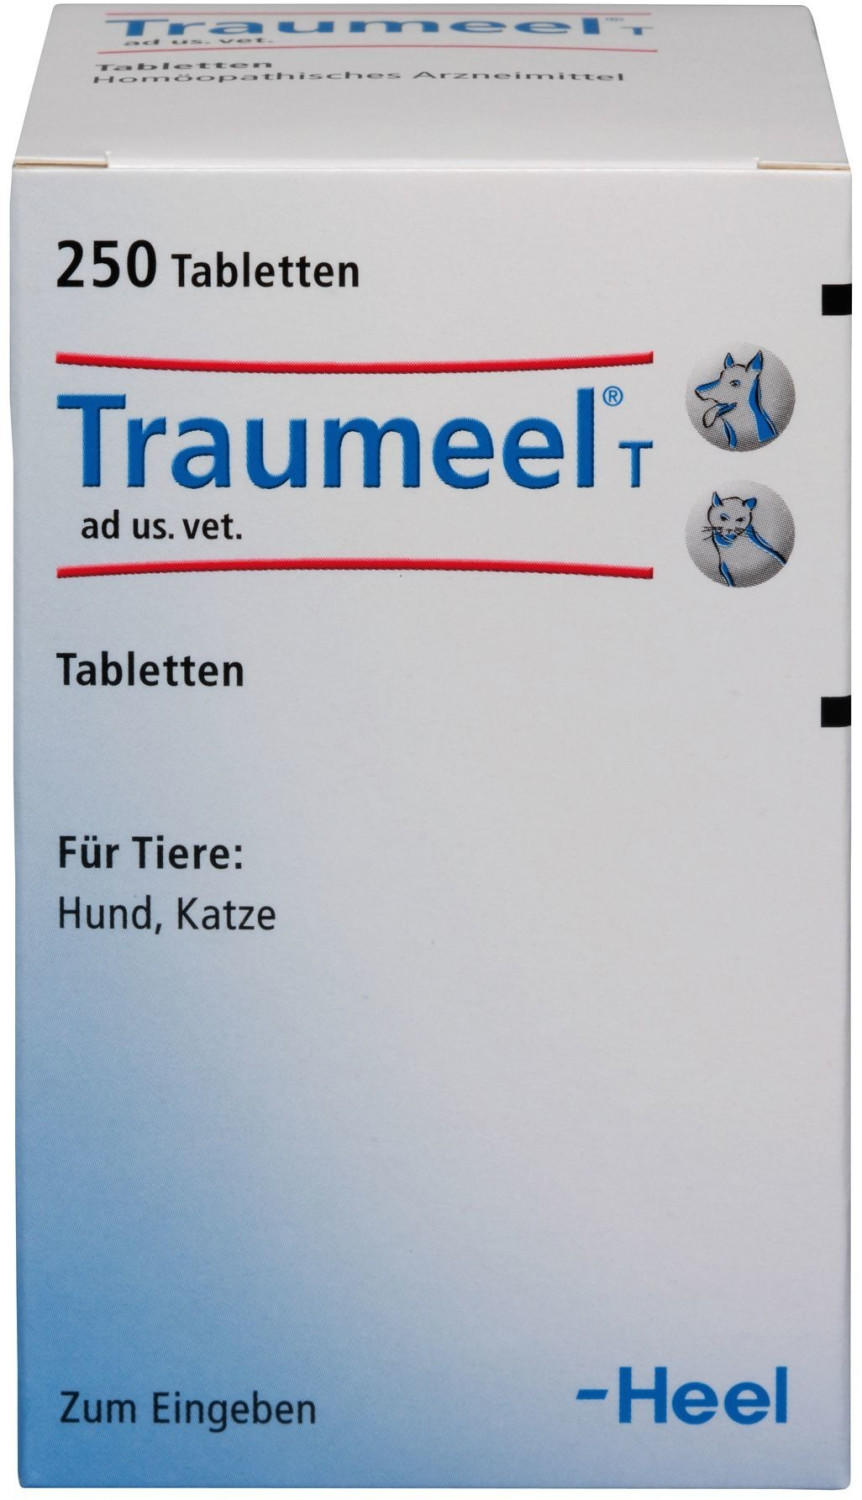 Heel Traumeel T ad us. vet. Tabletten 250 Stück Test TOP Angebote ab 30,42  € (März 2023)